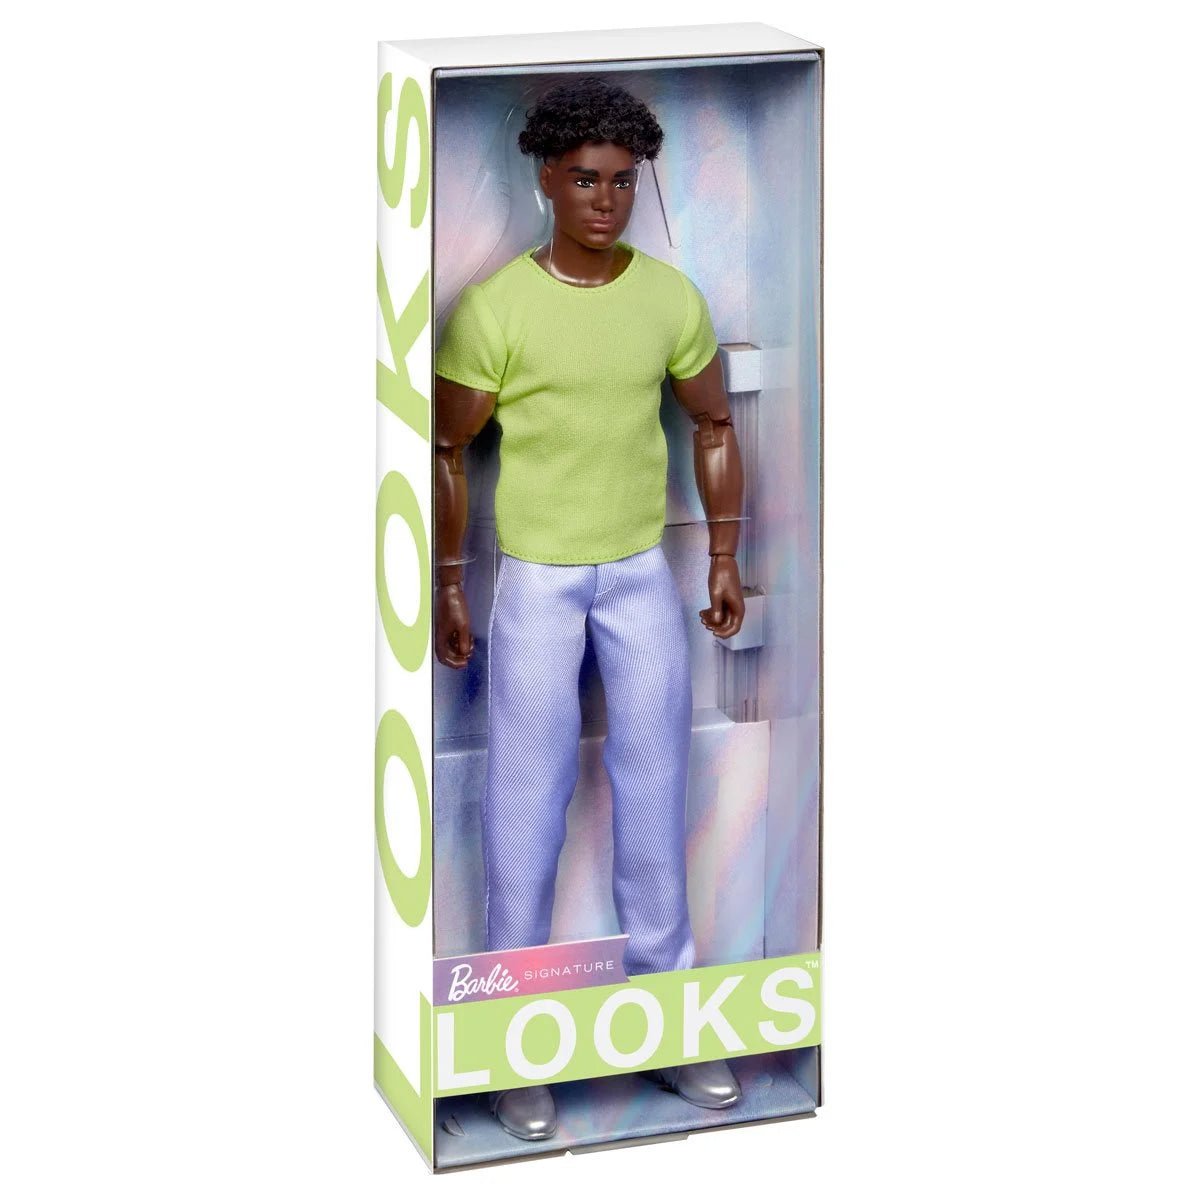 Barbie Signature Barbie Looks Doll #25 (Buff Body Ken, Short Black Hair) - Simon's Collectibles